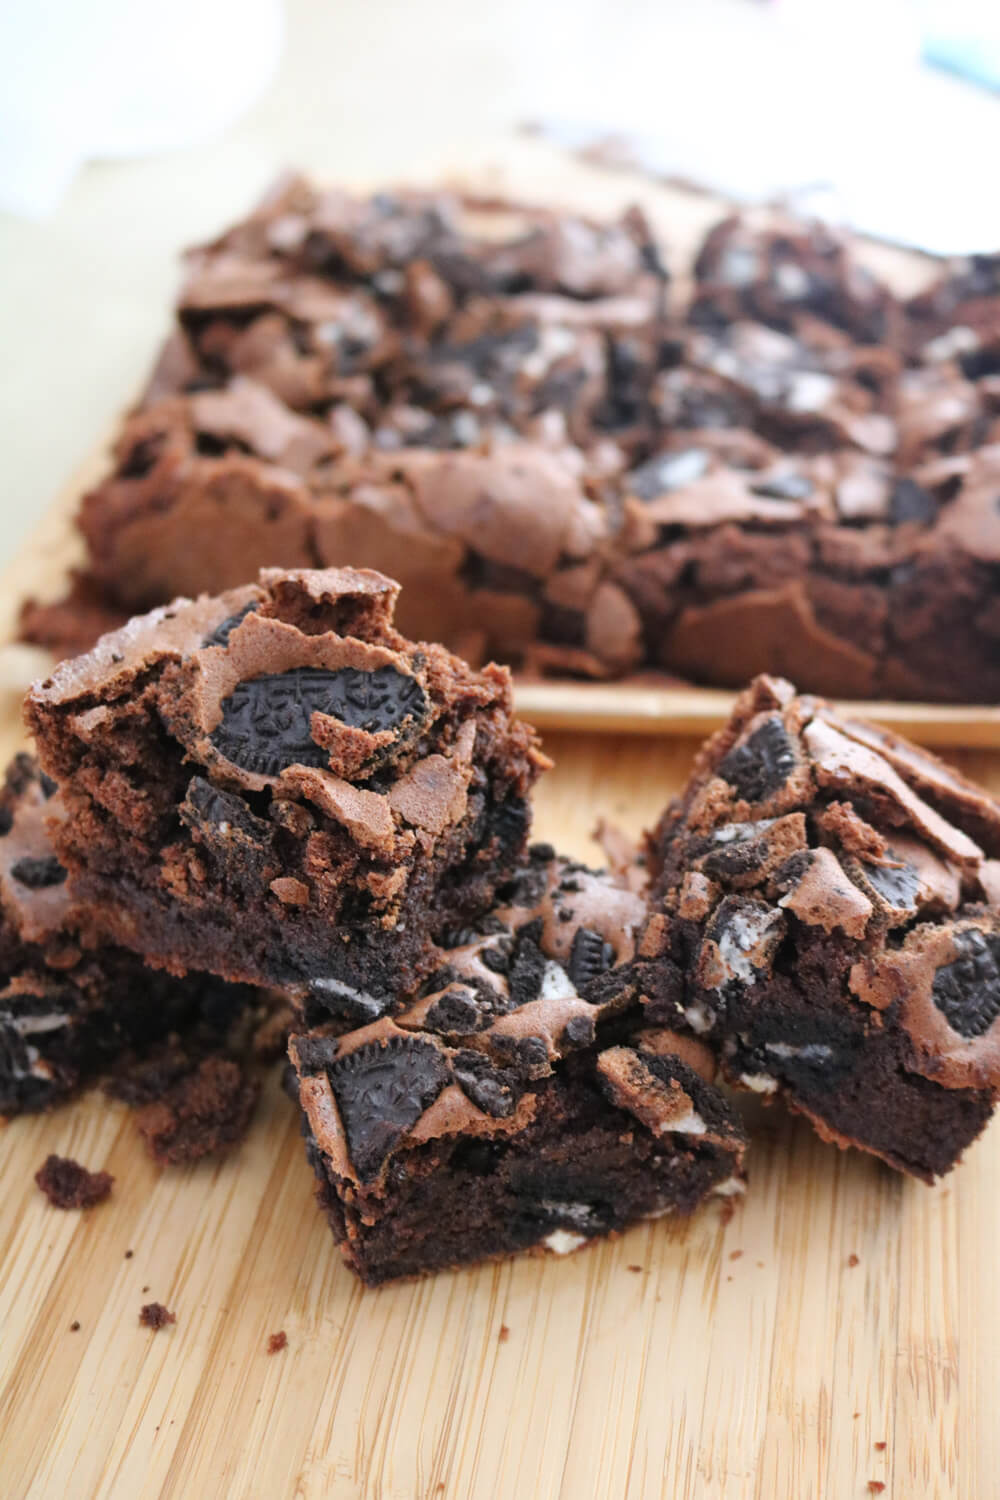 Oreo Fudge Brownies Recipe | Hungry Little Bear